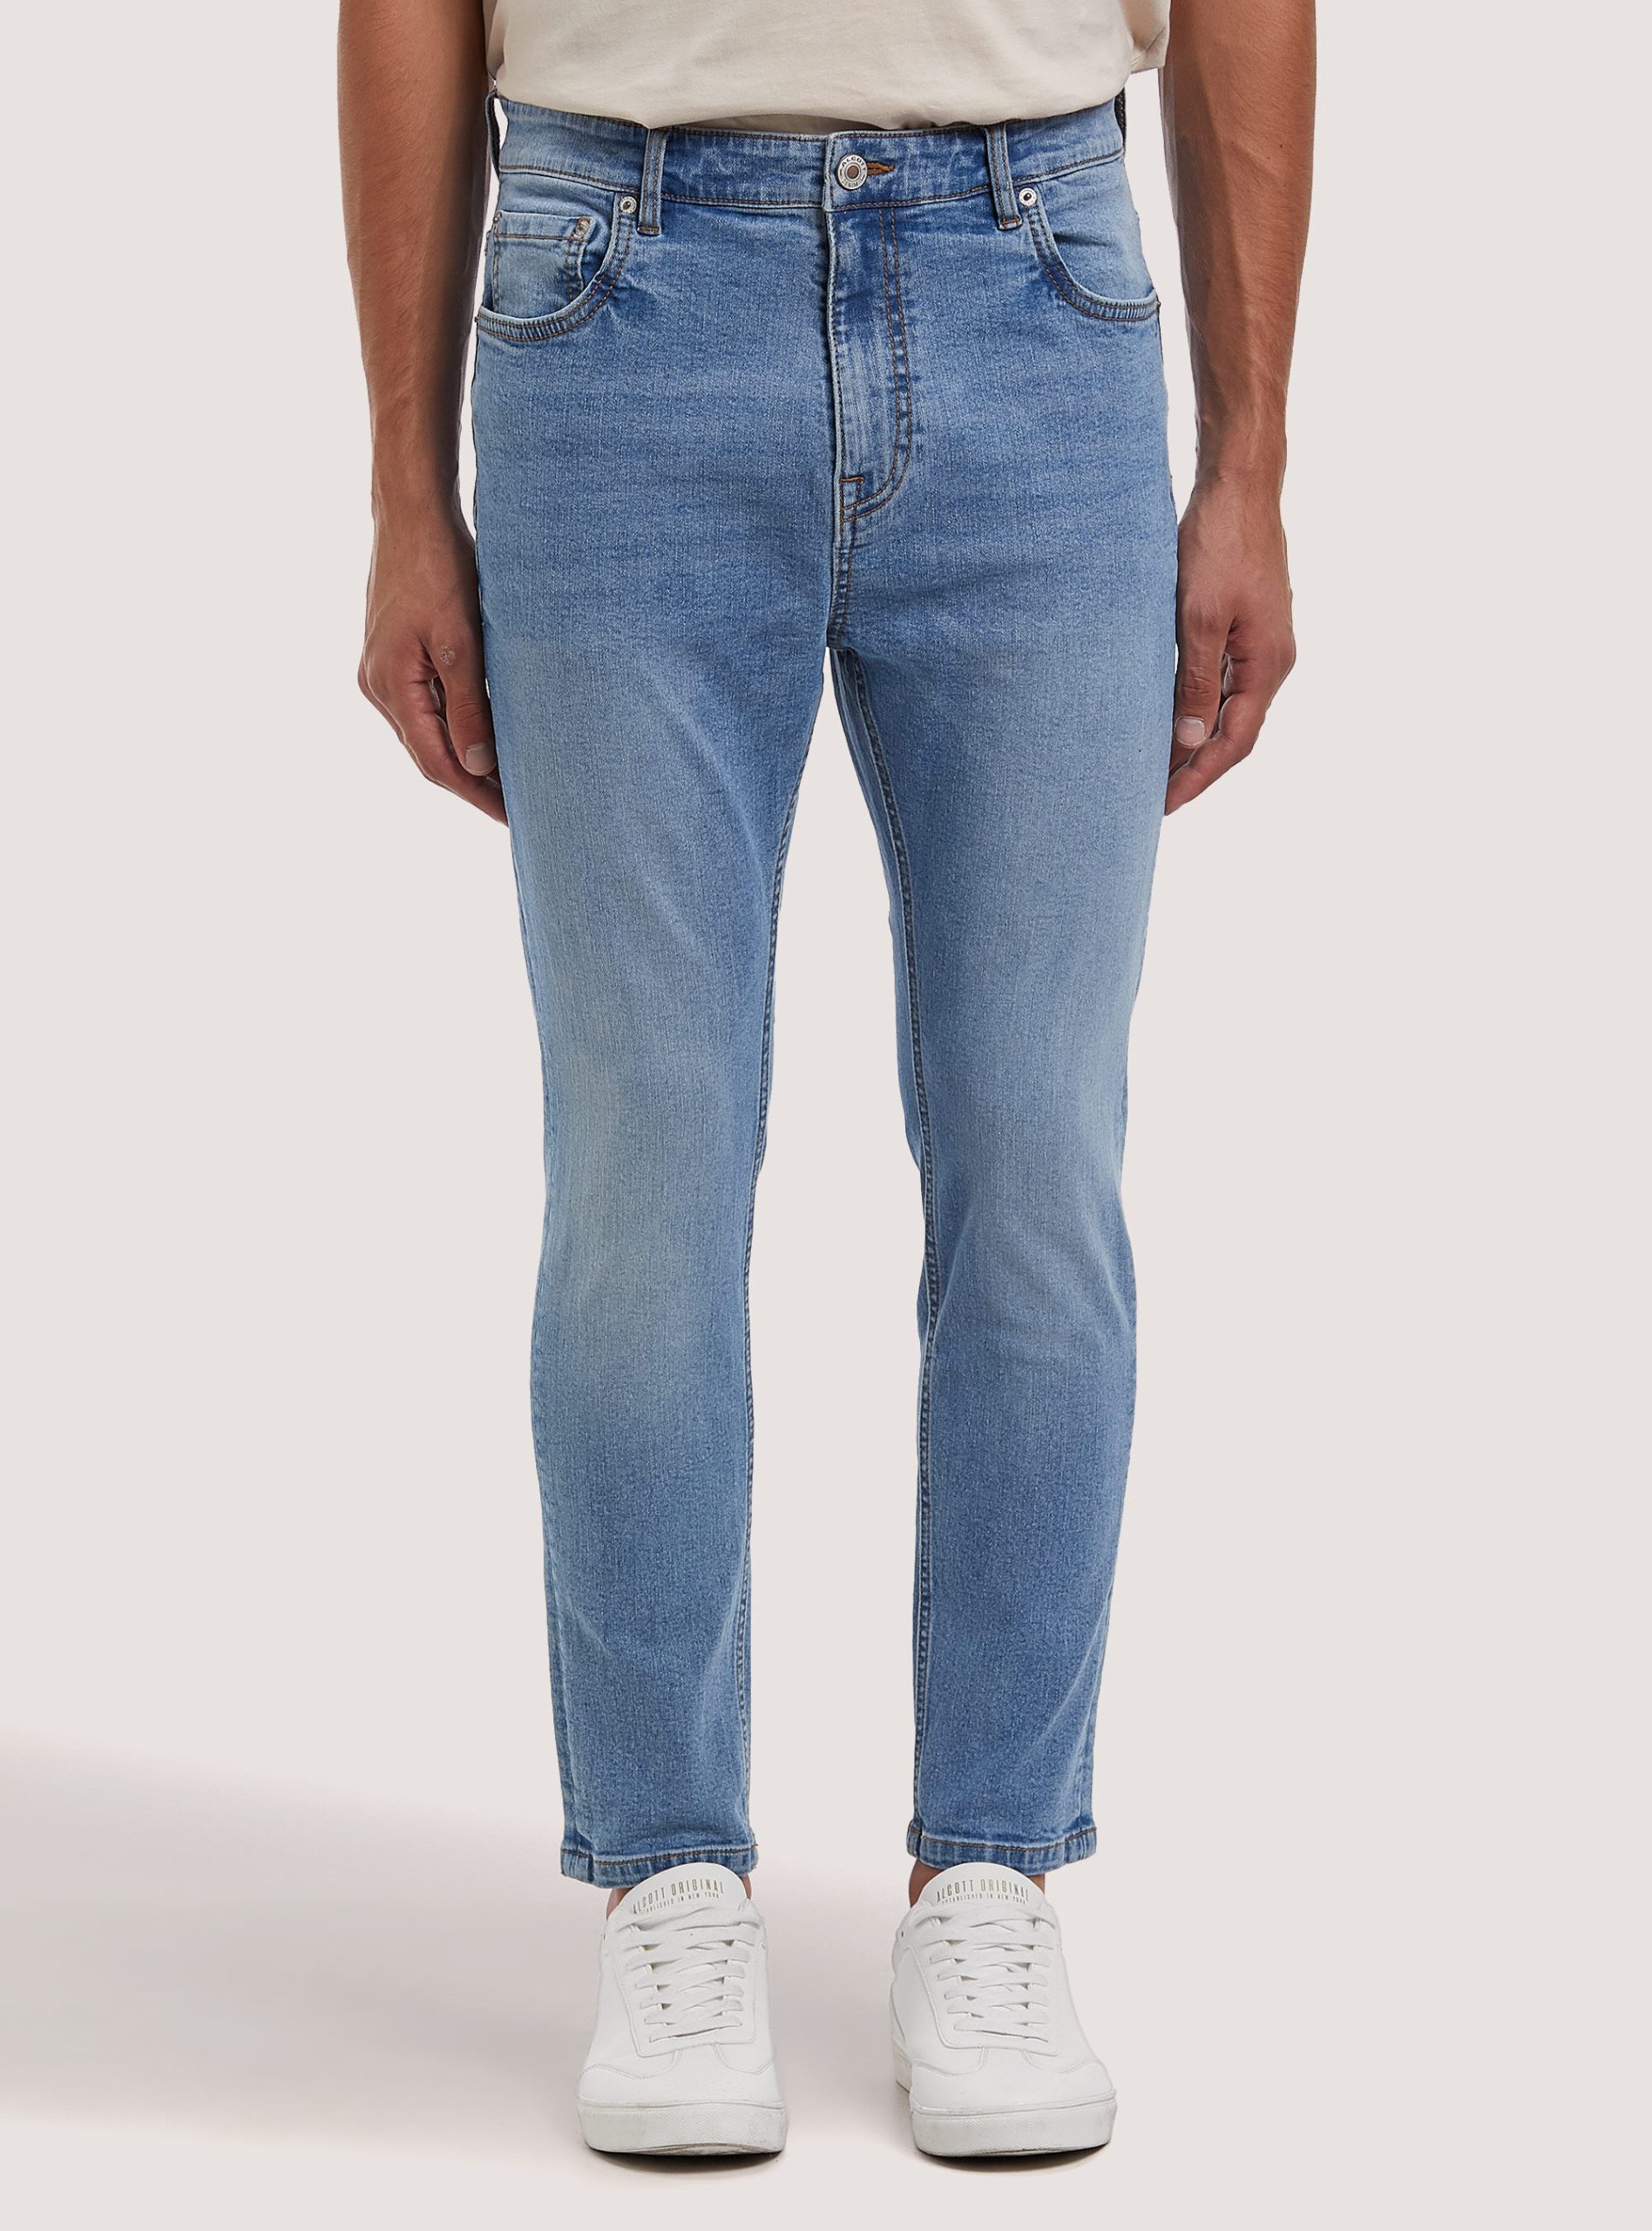 D007 Light Azure Männer Robustheit Alcott Jeans Stretch Denim Carrot Fit Jeans – 1